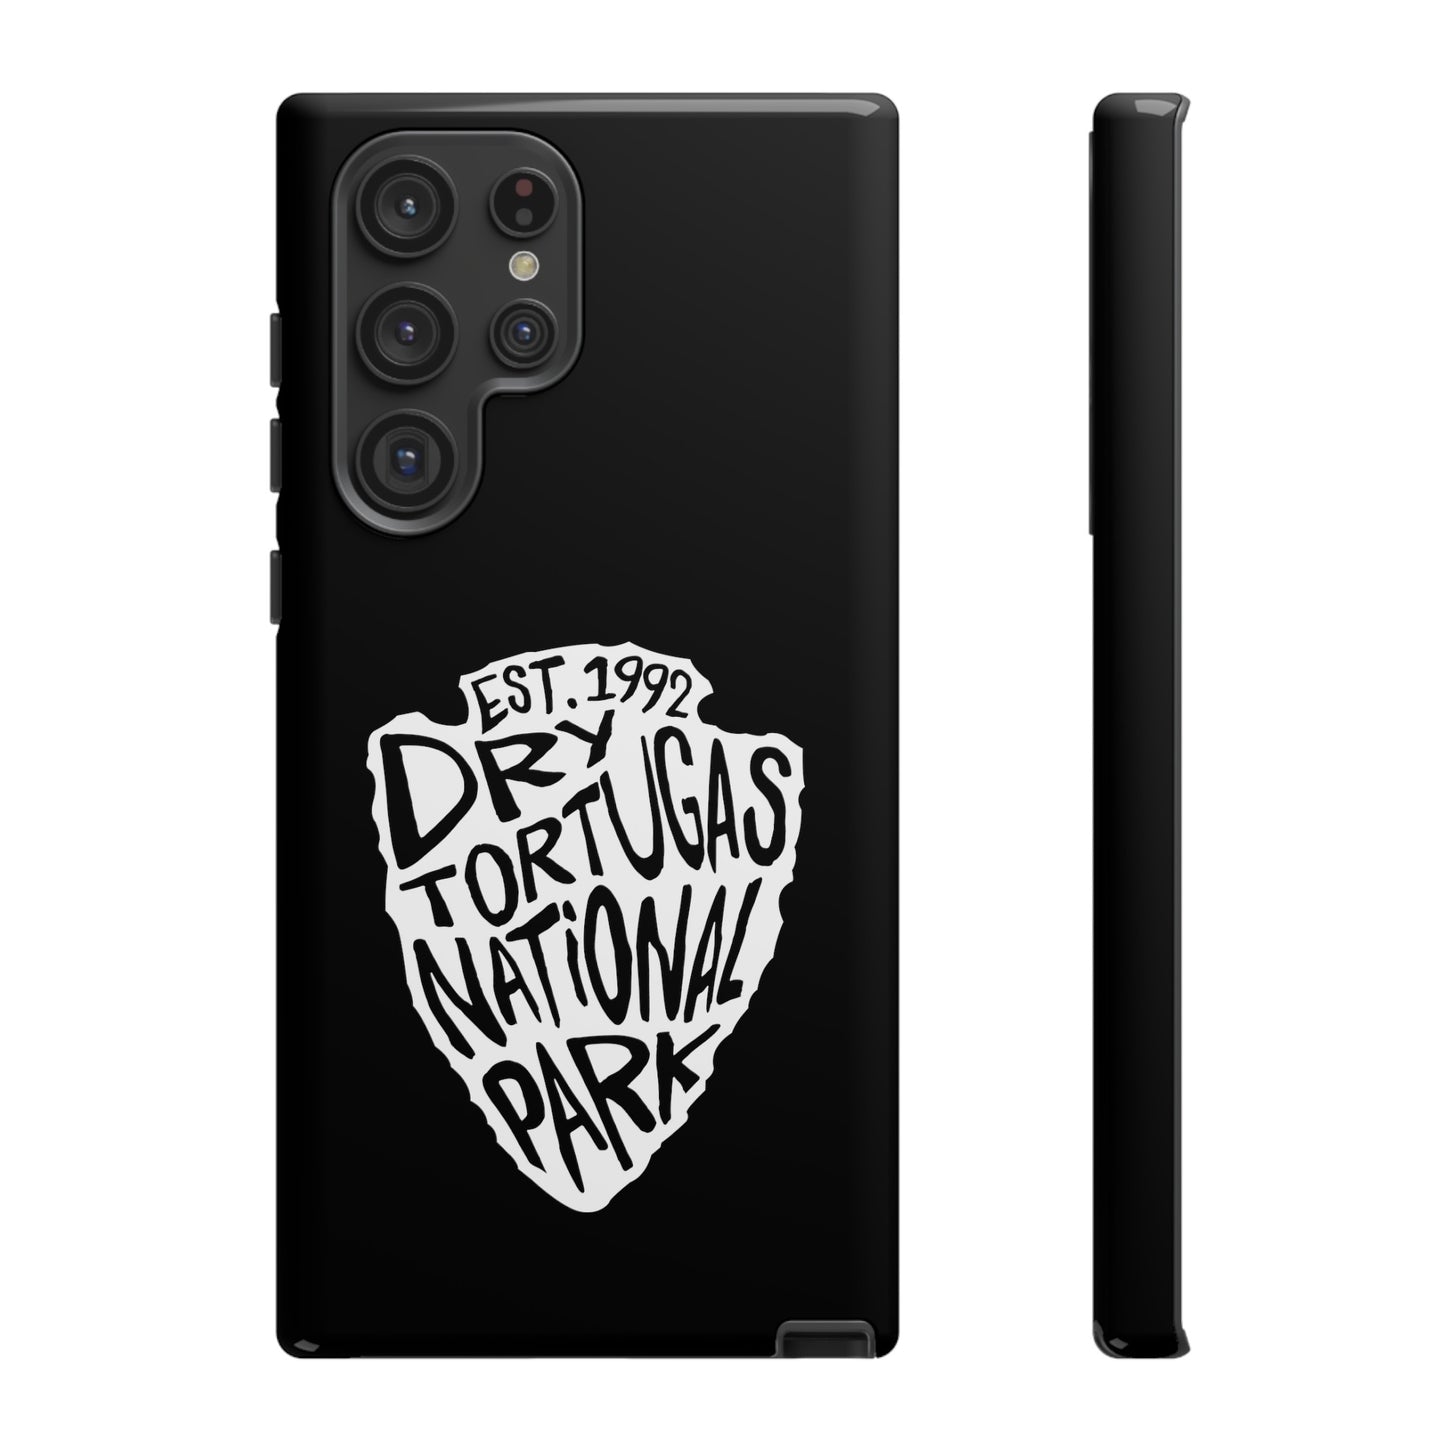 Dry Tortugas National Park Phone Case - Arrowhead Design